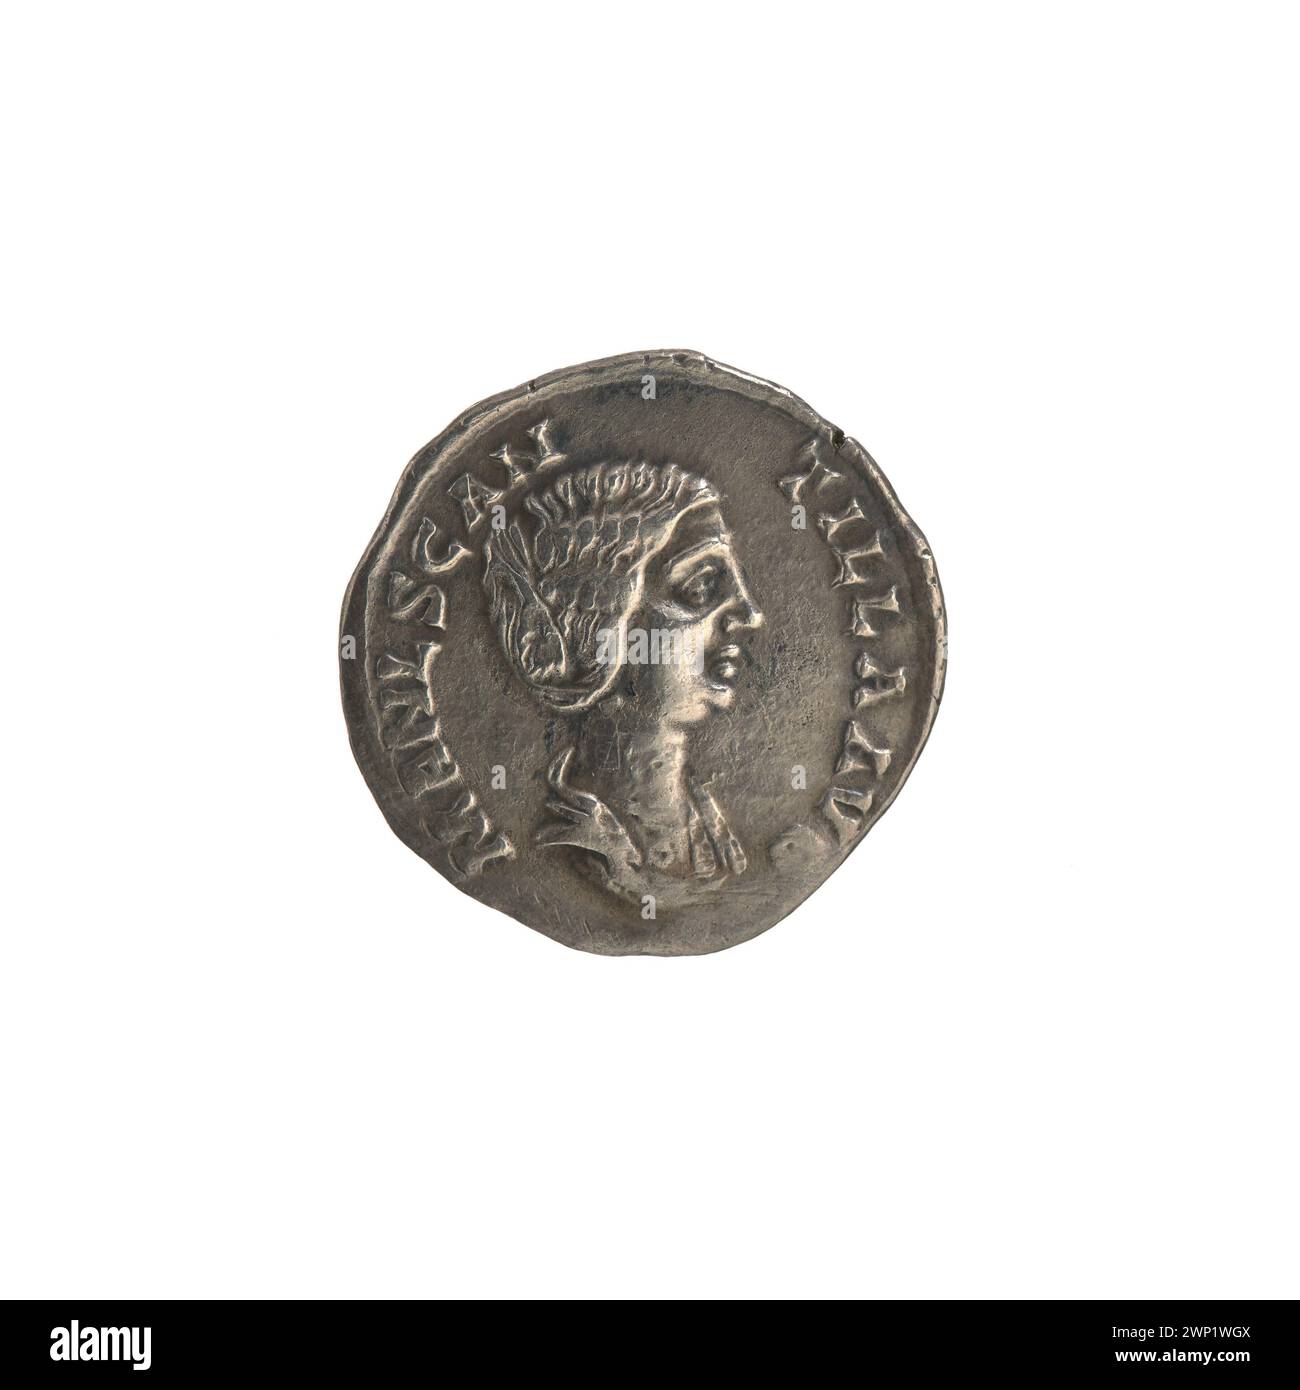 Denar (BECKERA FALSEF); Becker, Carl Wilhelm (contraffazione di monete; 1772-1830), Manlia Scantylla (FL. 193; imperatrice romana 28.3-1,6.193); 193 (per l'originale) (193-00-00-193-00-00-00-00); Foto Stock